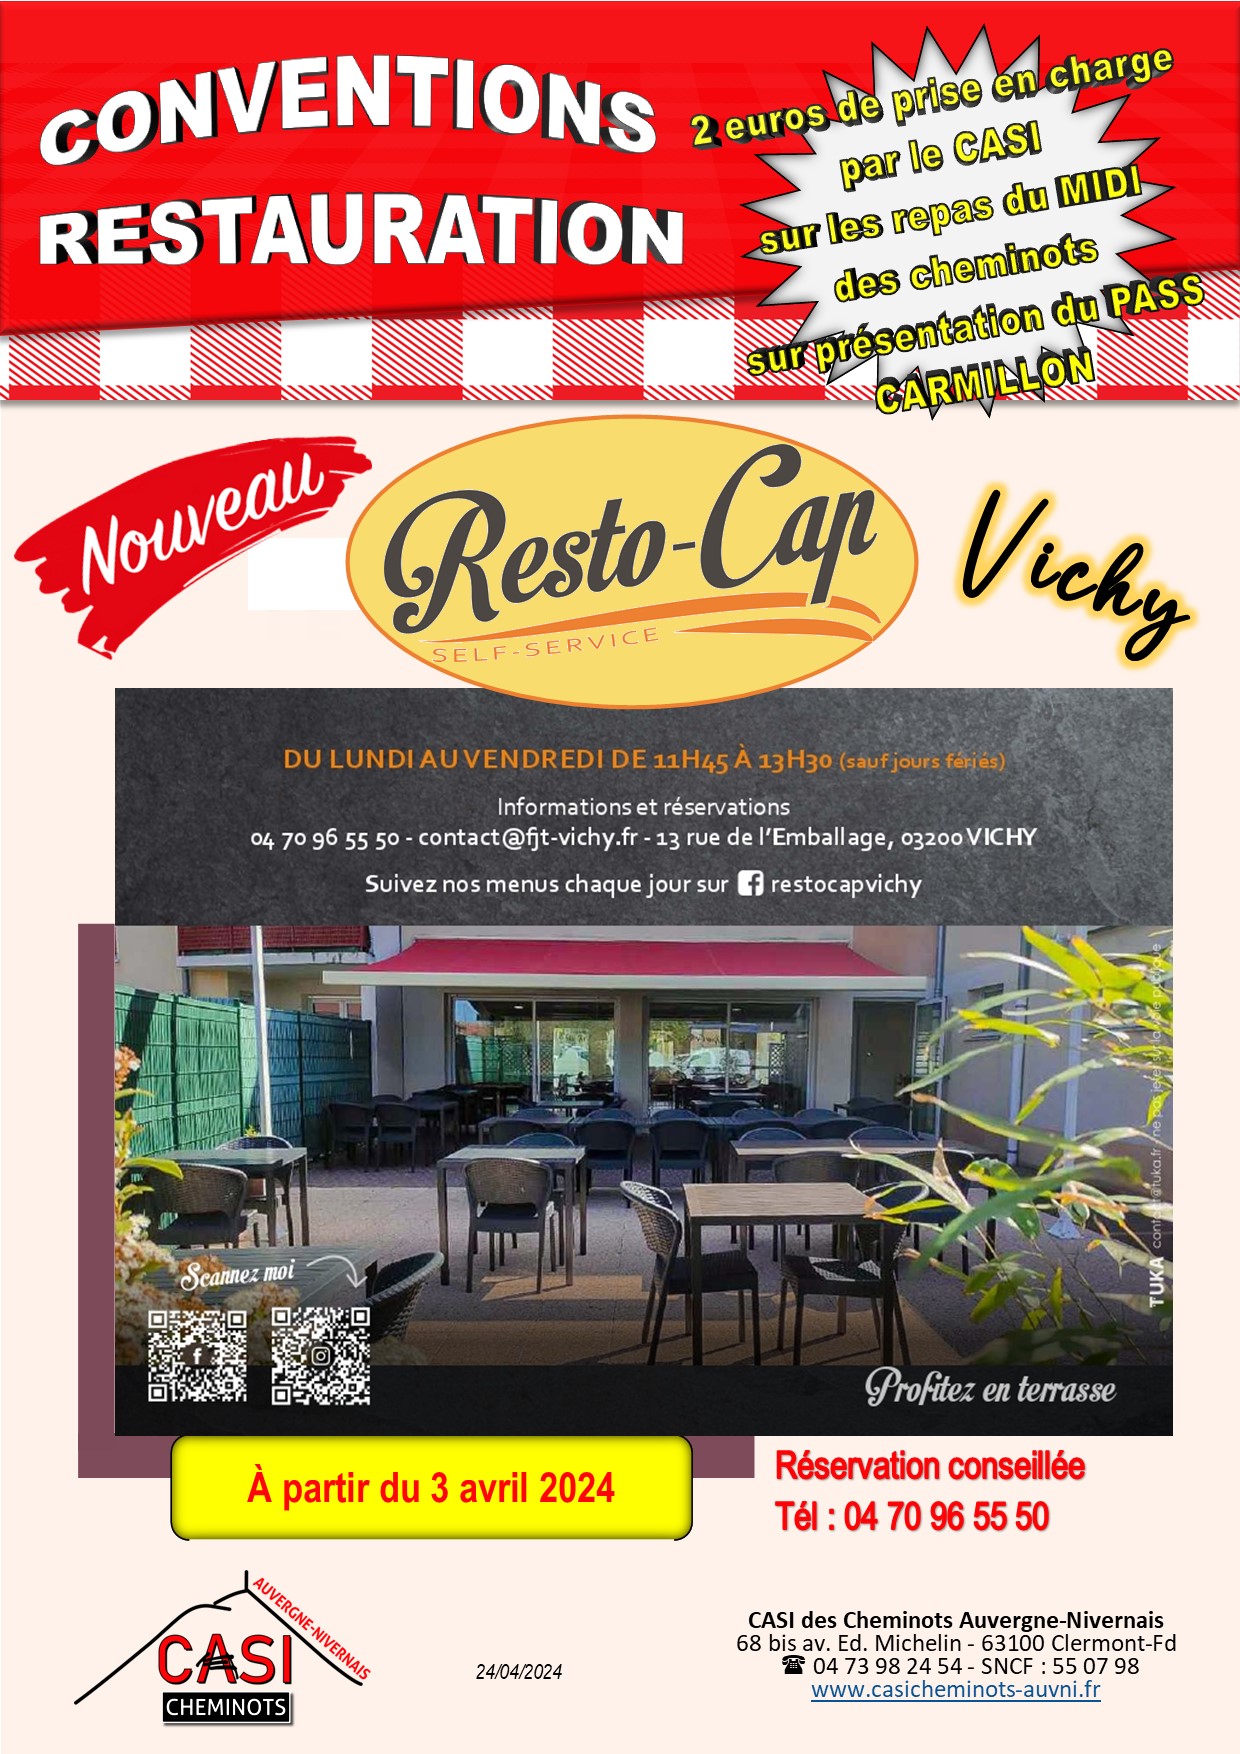 2024 Affiche Conventions Restaurant Resto Cap à Vichy